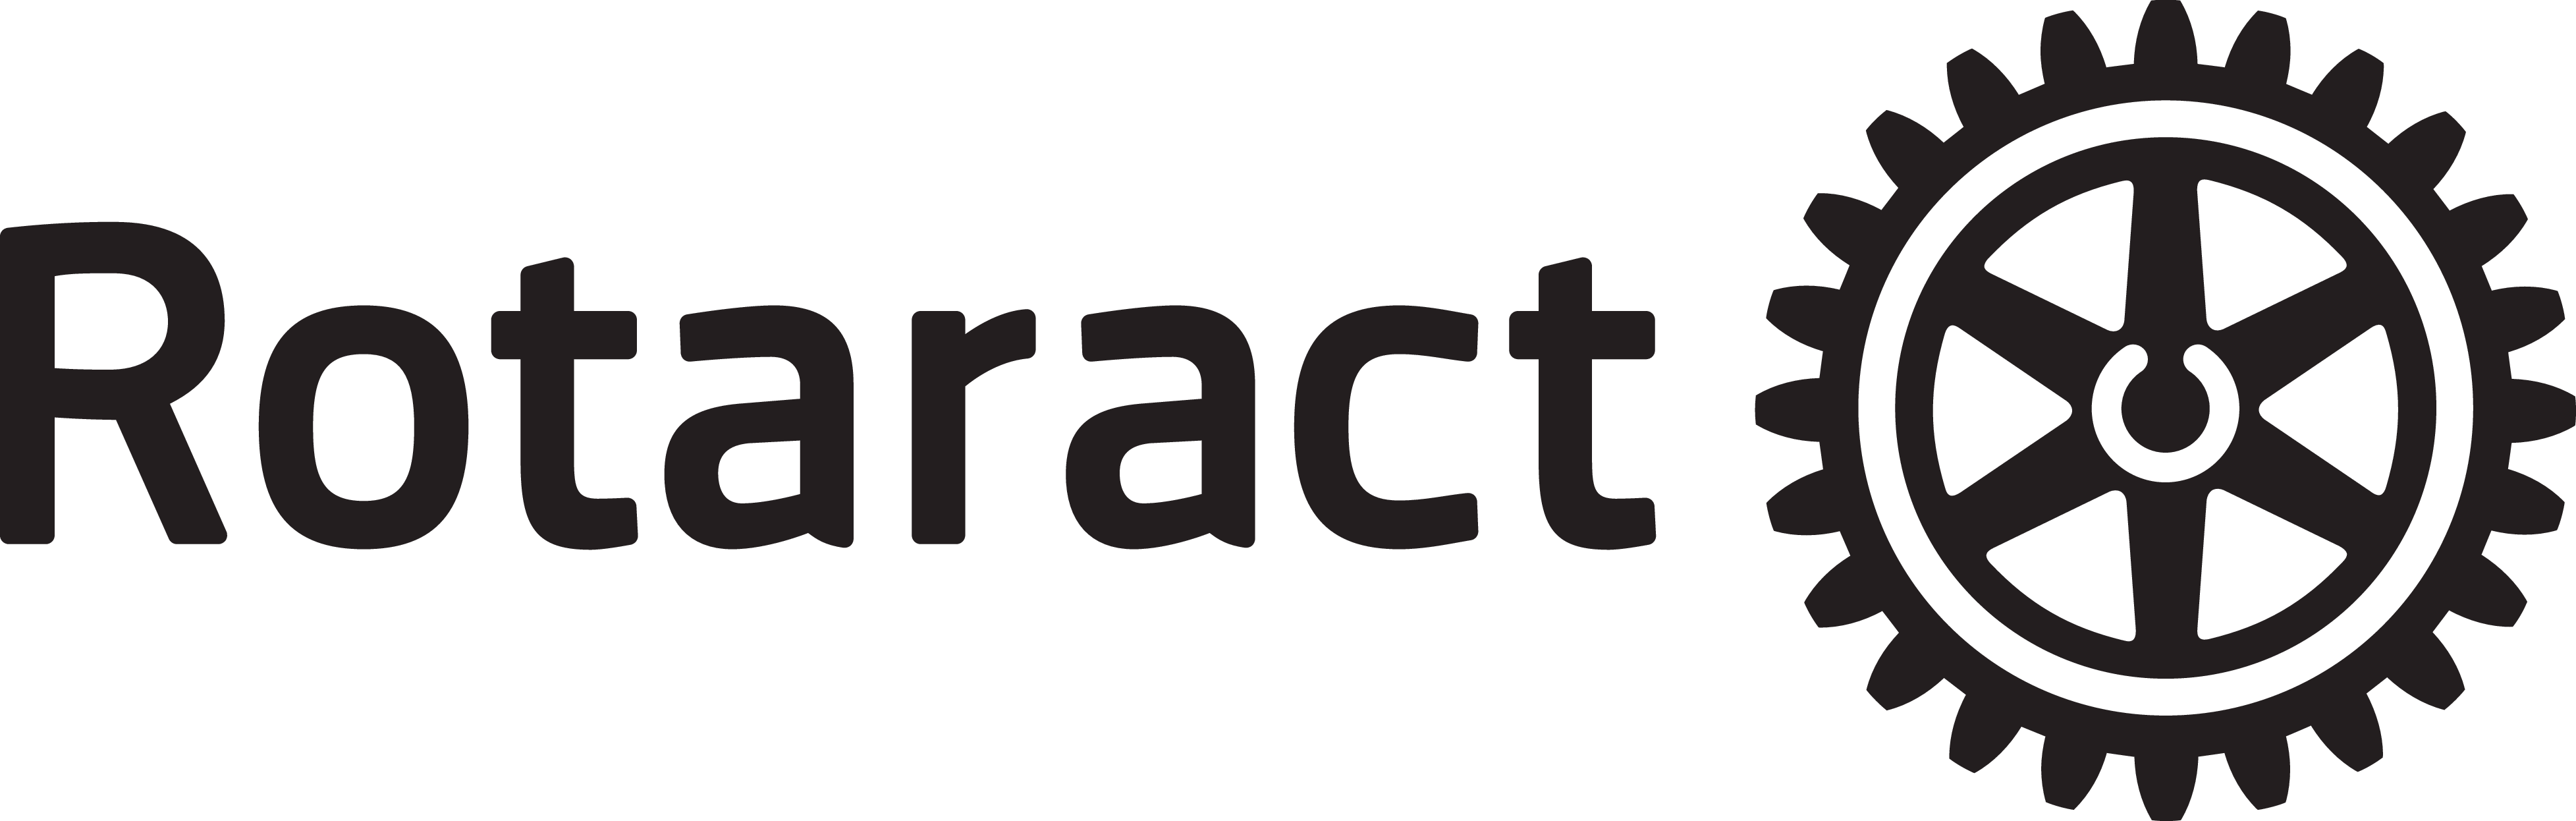 Rotaract Masterbrand Simplified - Black